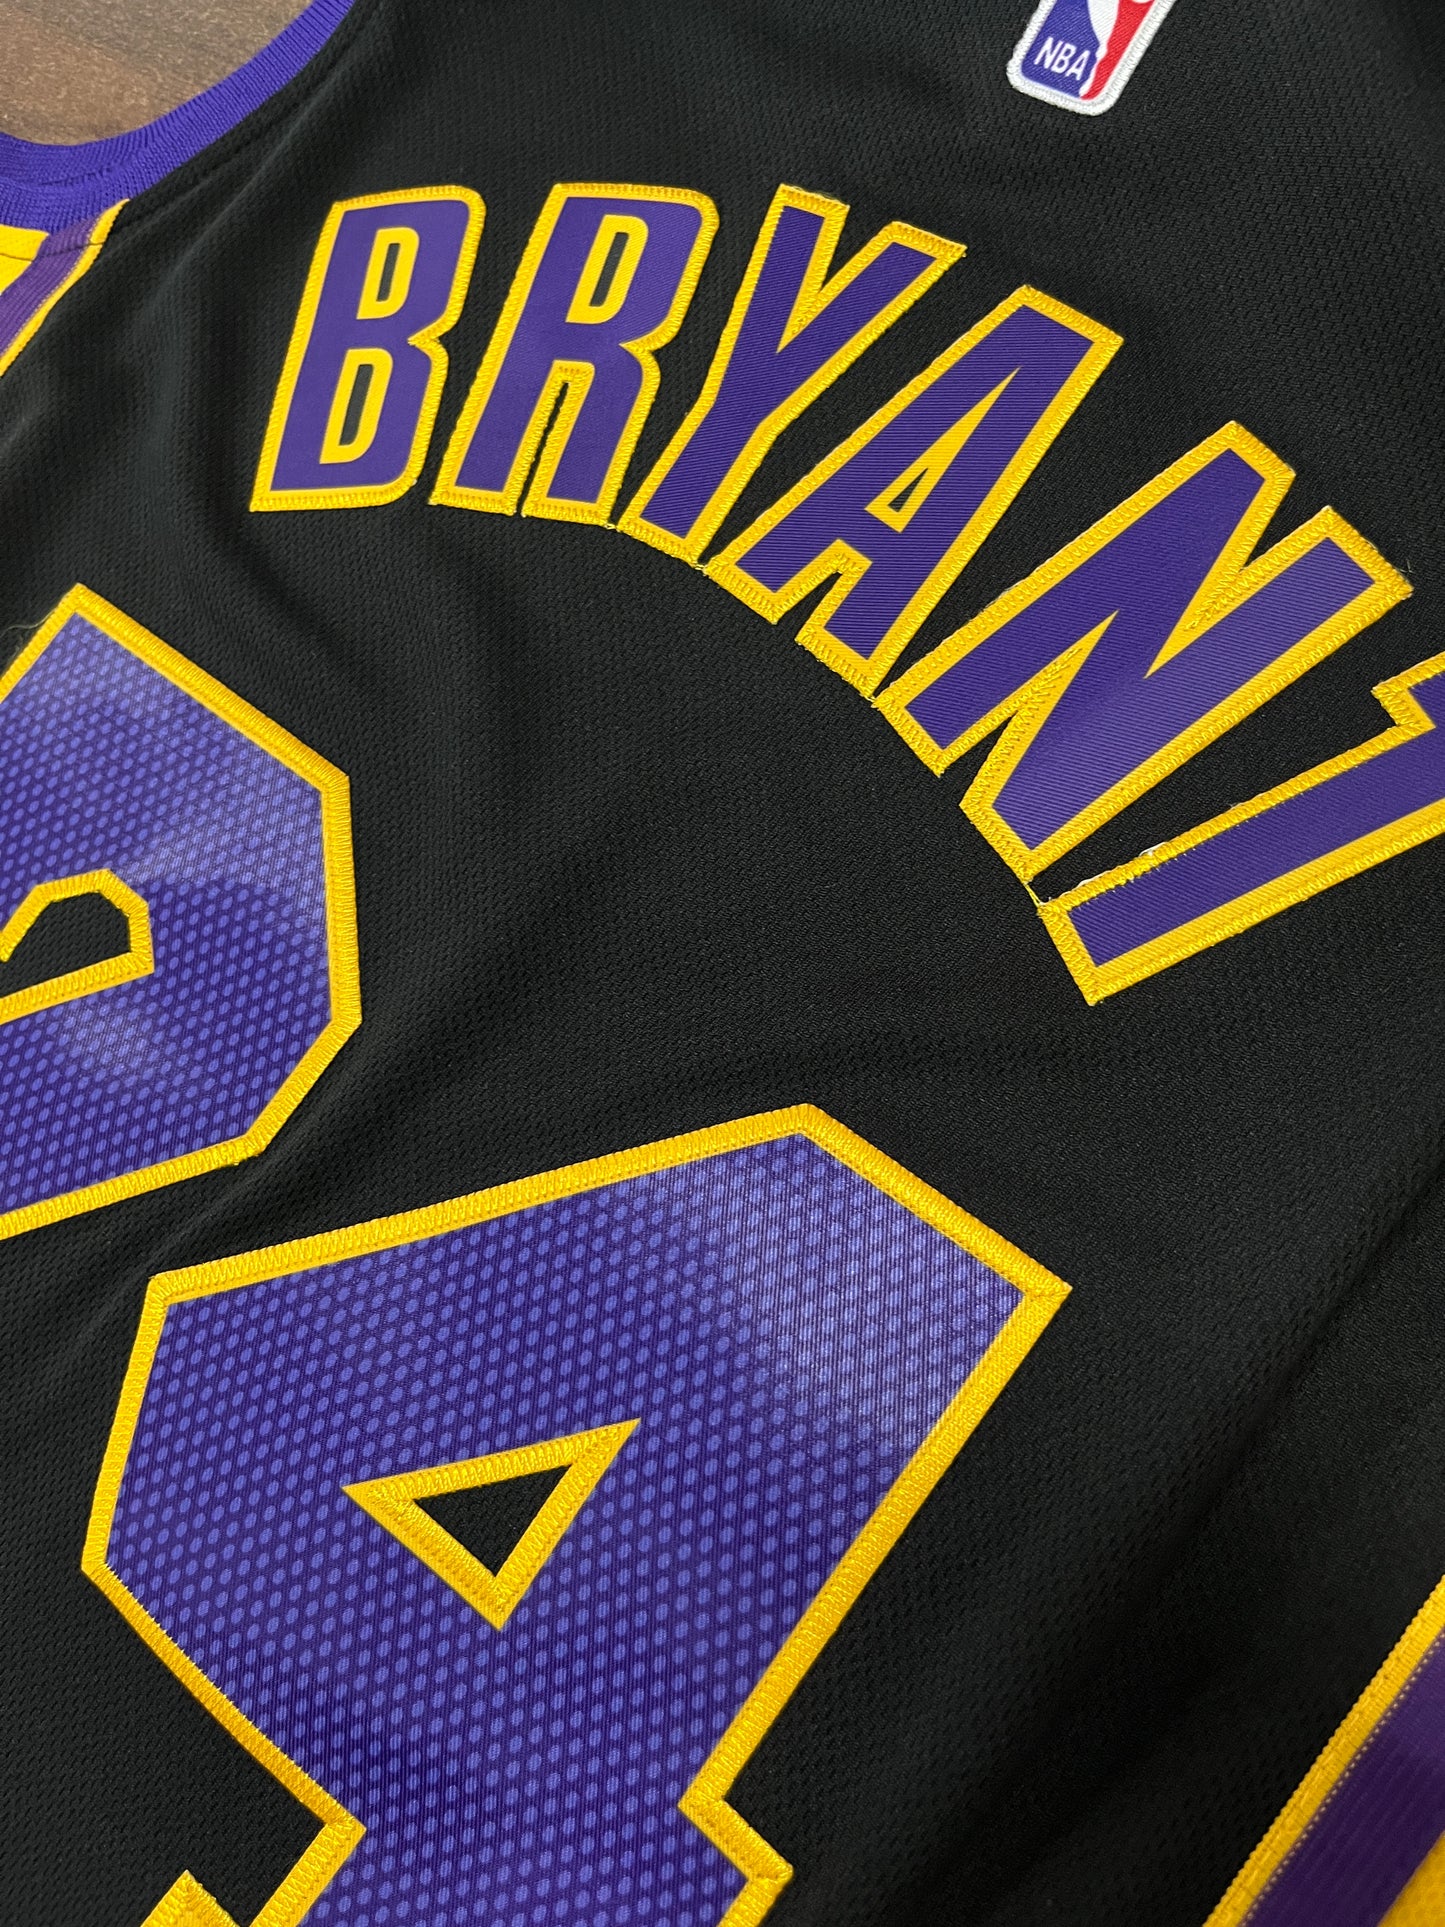 BRYANT 24 BLACK T-SHIRT Los Angeles Lakers NBA Jersey